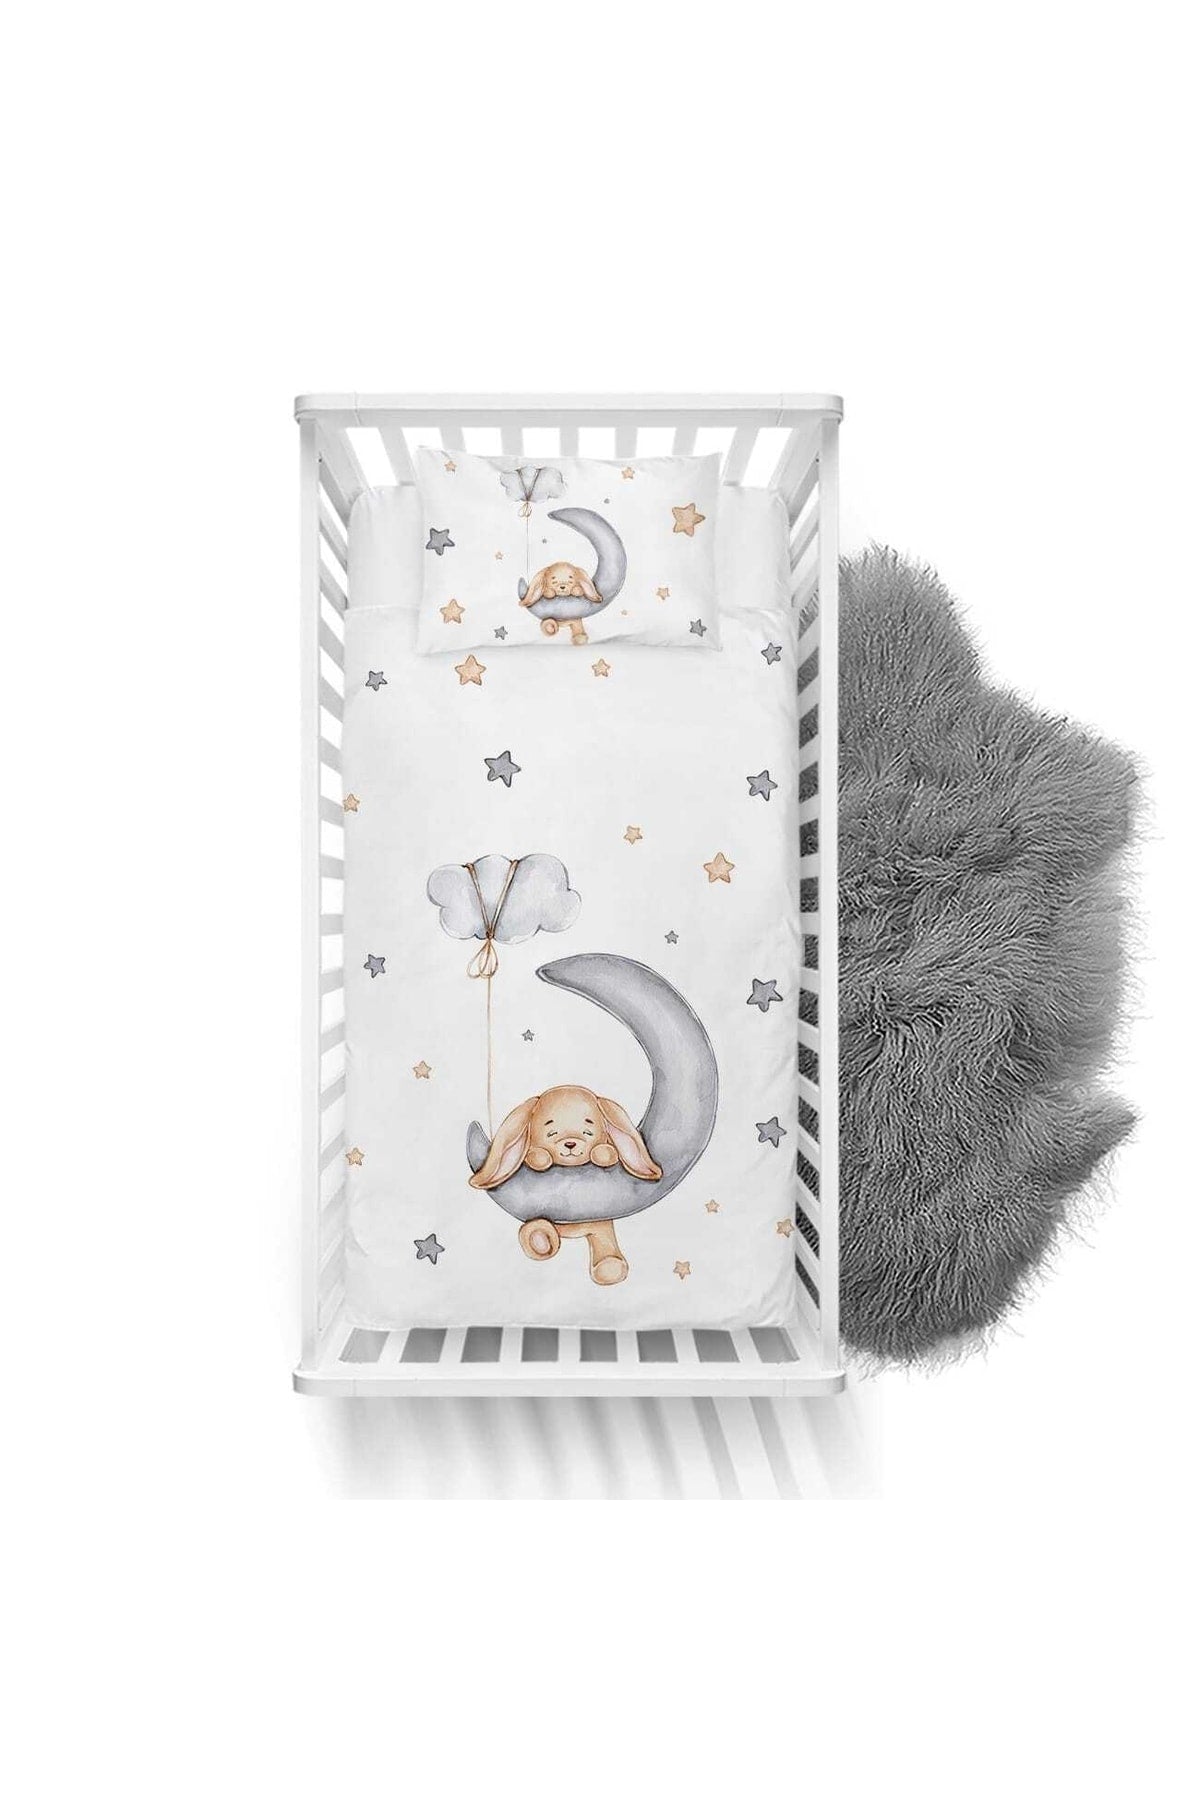 Tugu Home&baby Digital Printed Cotton Micro Satin 100x150 Baby Room Duvet Cover28